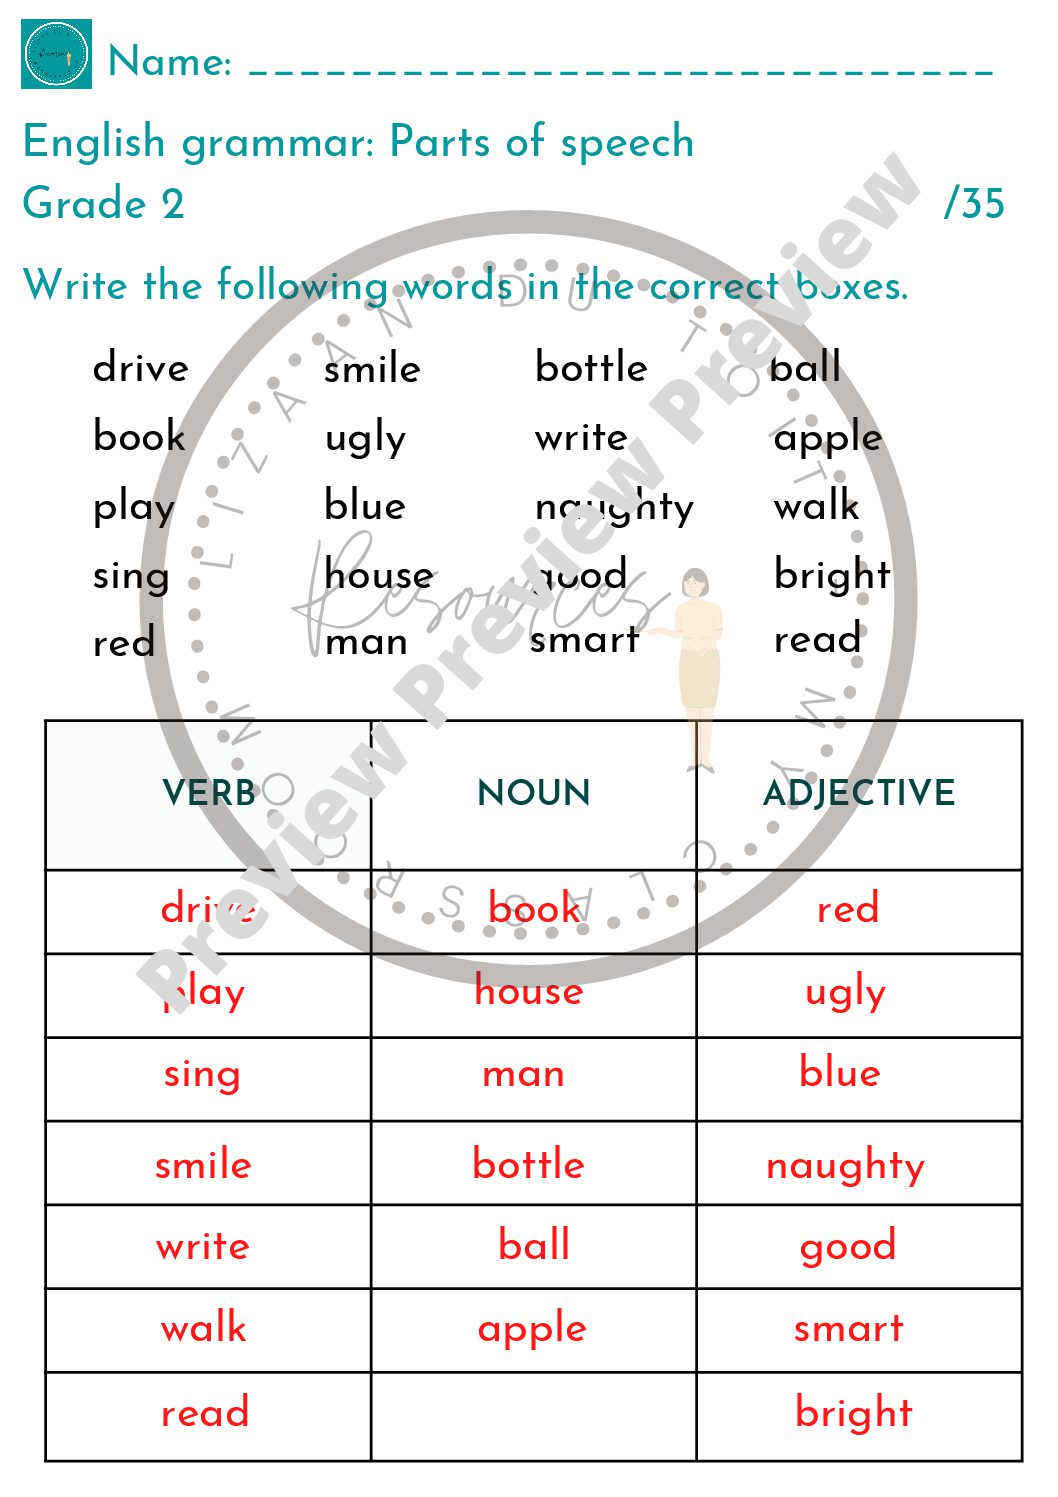 grammar worksheets for parts of speech